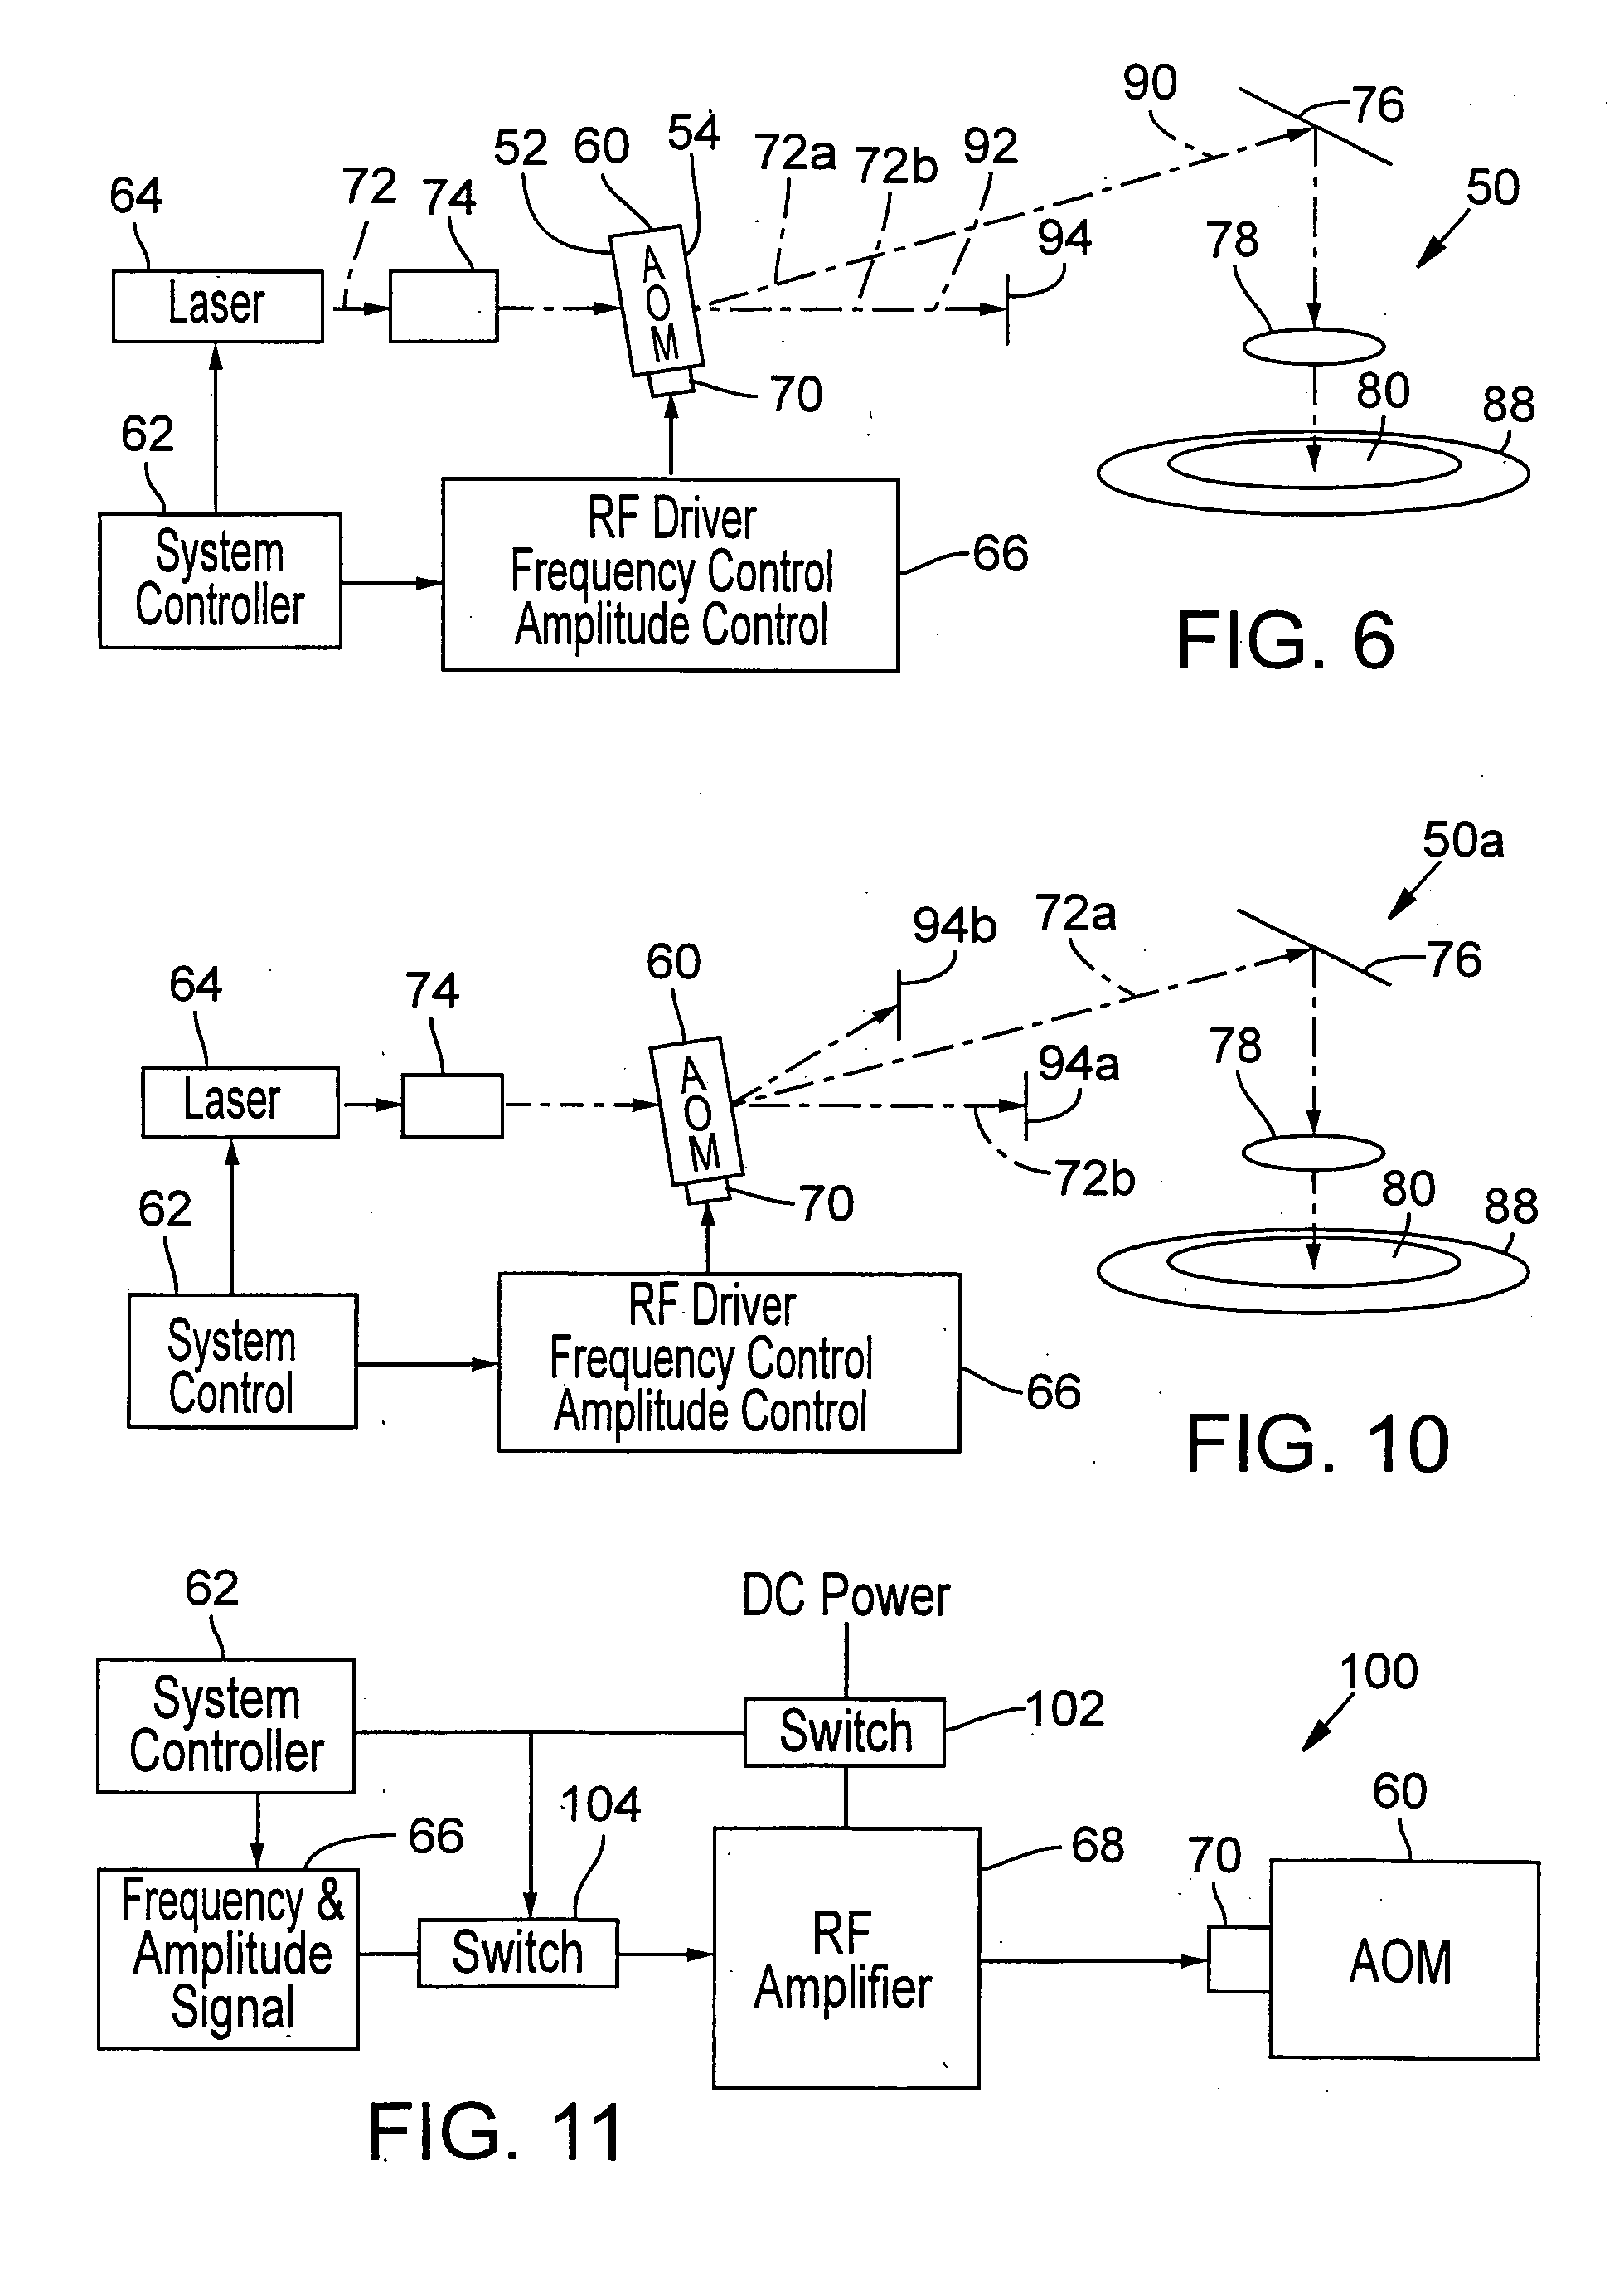 AOM modulation techniques employing an upstream Bragg adjustment device